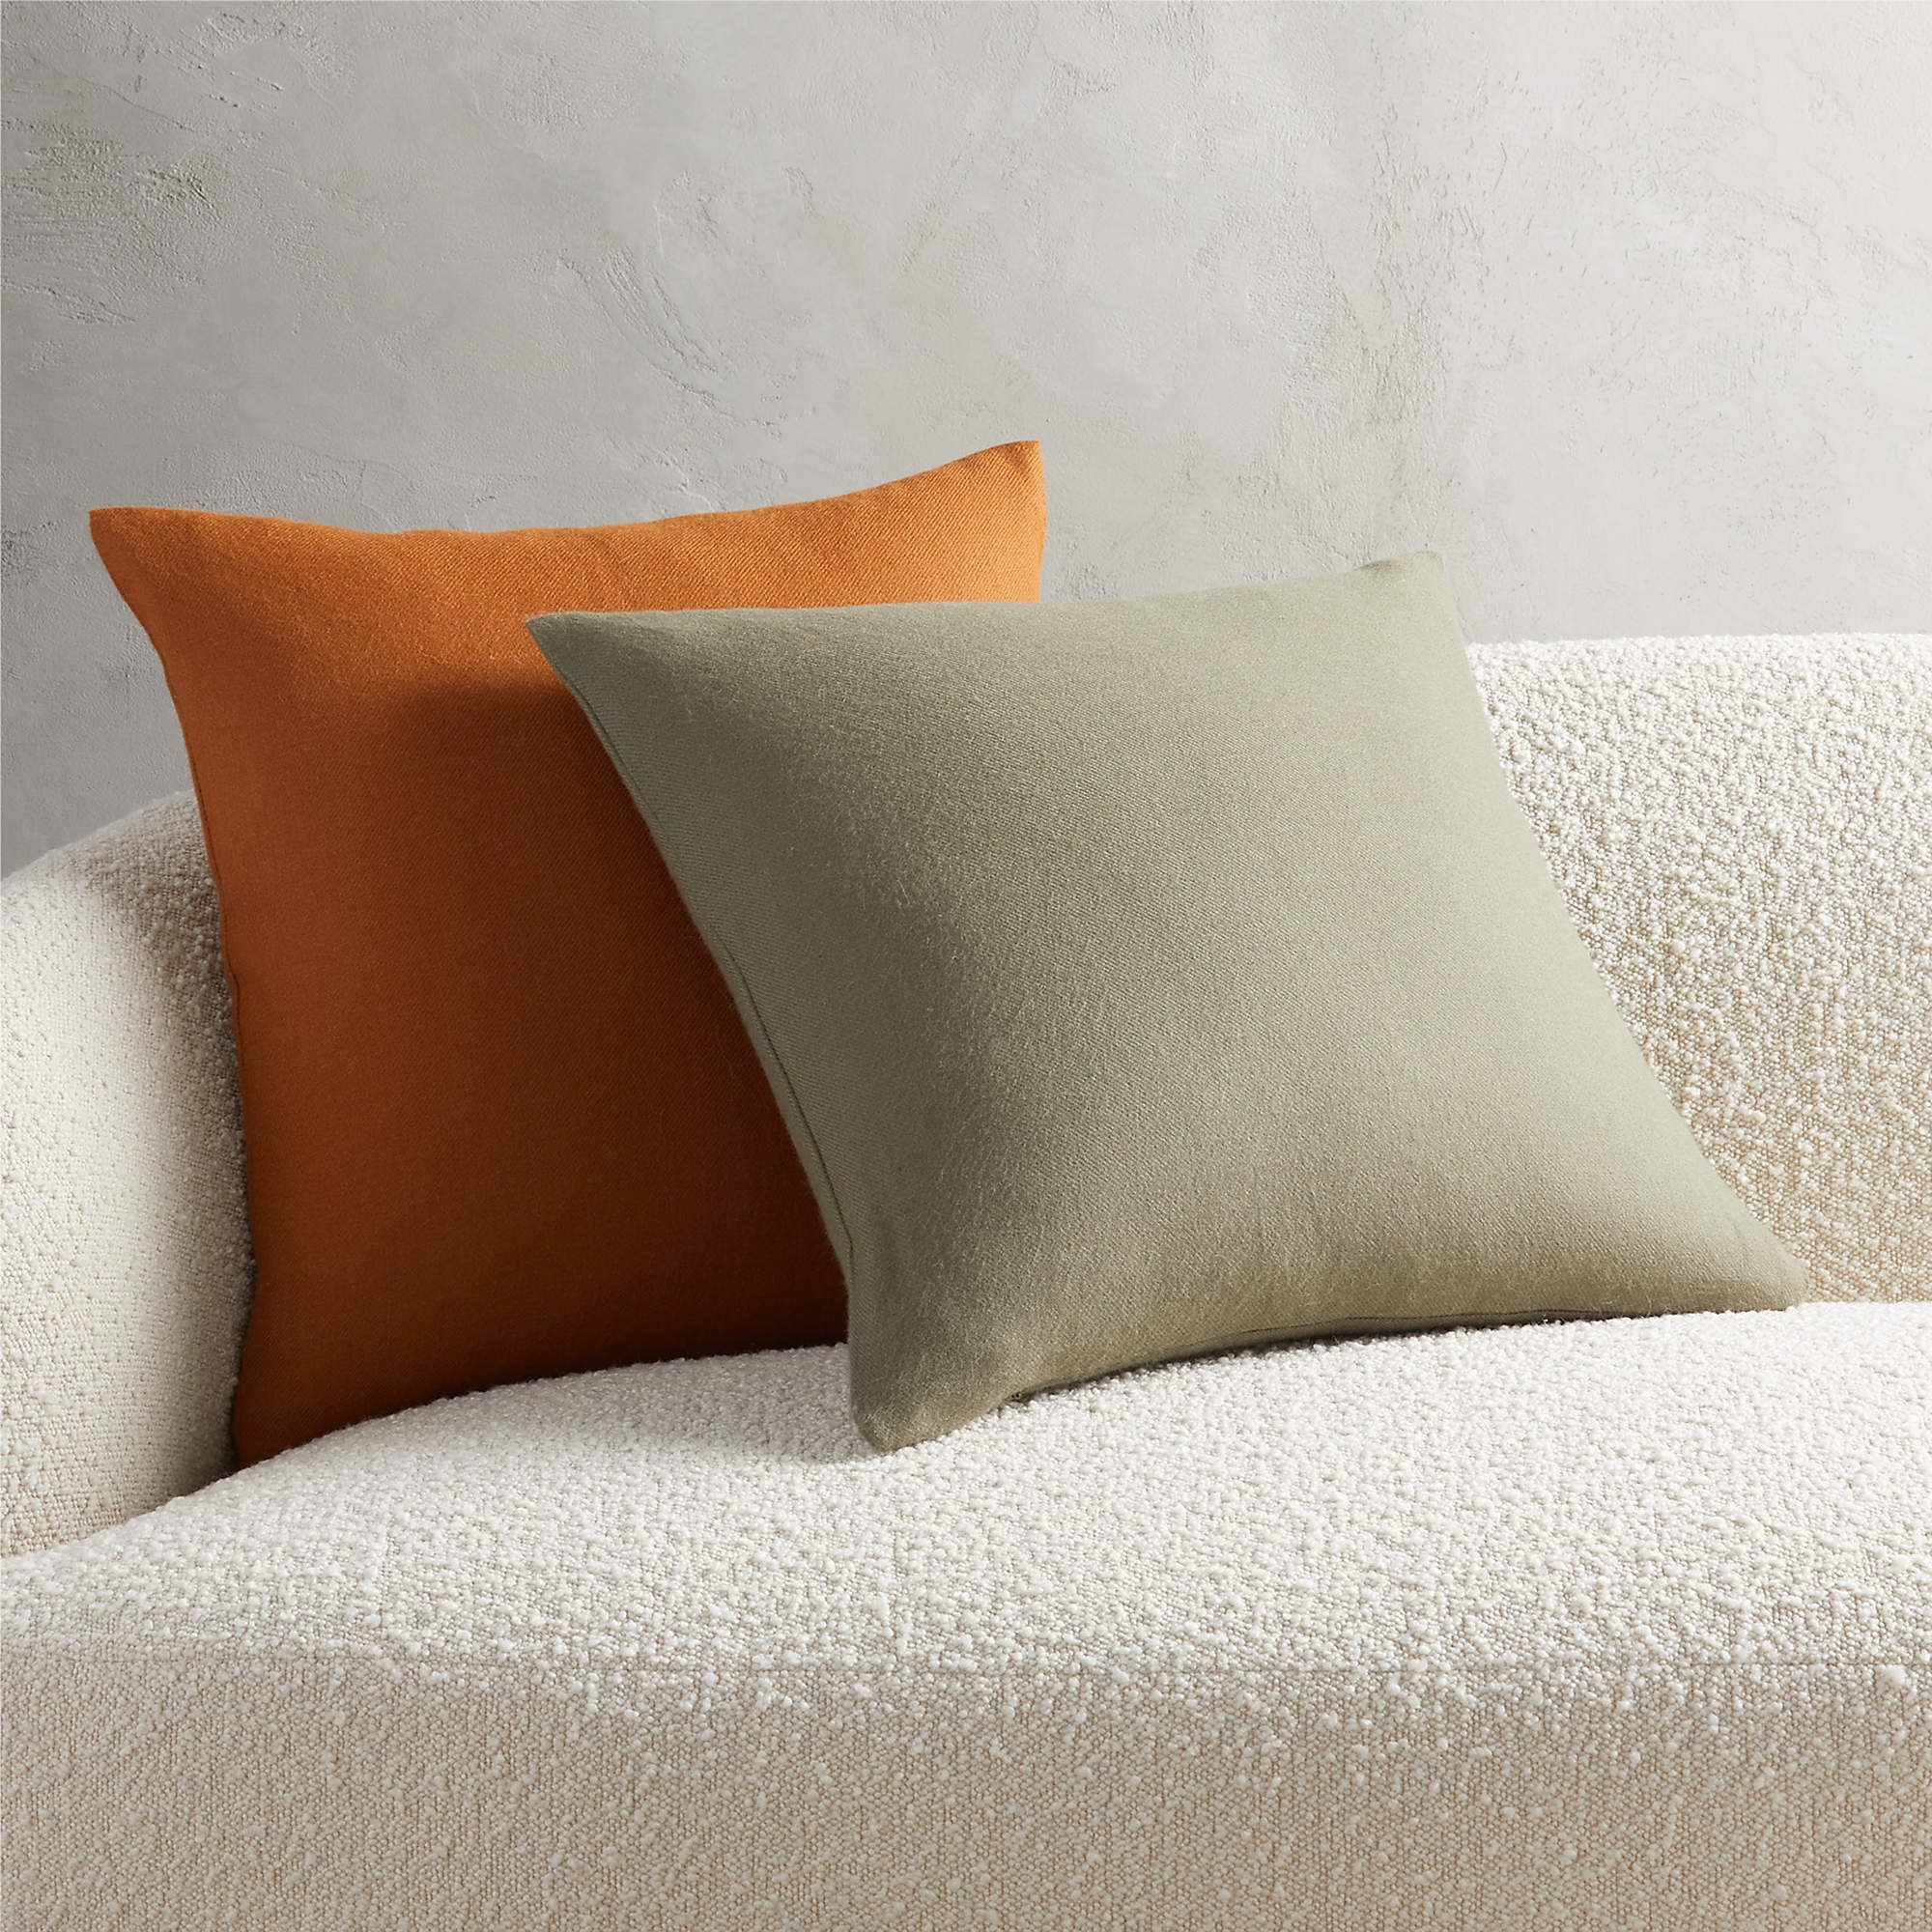 Alpaca Copper Pillow with Down-Alternative Insert, 20" x 20" - Image 2